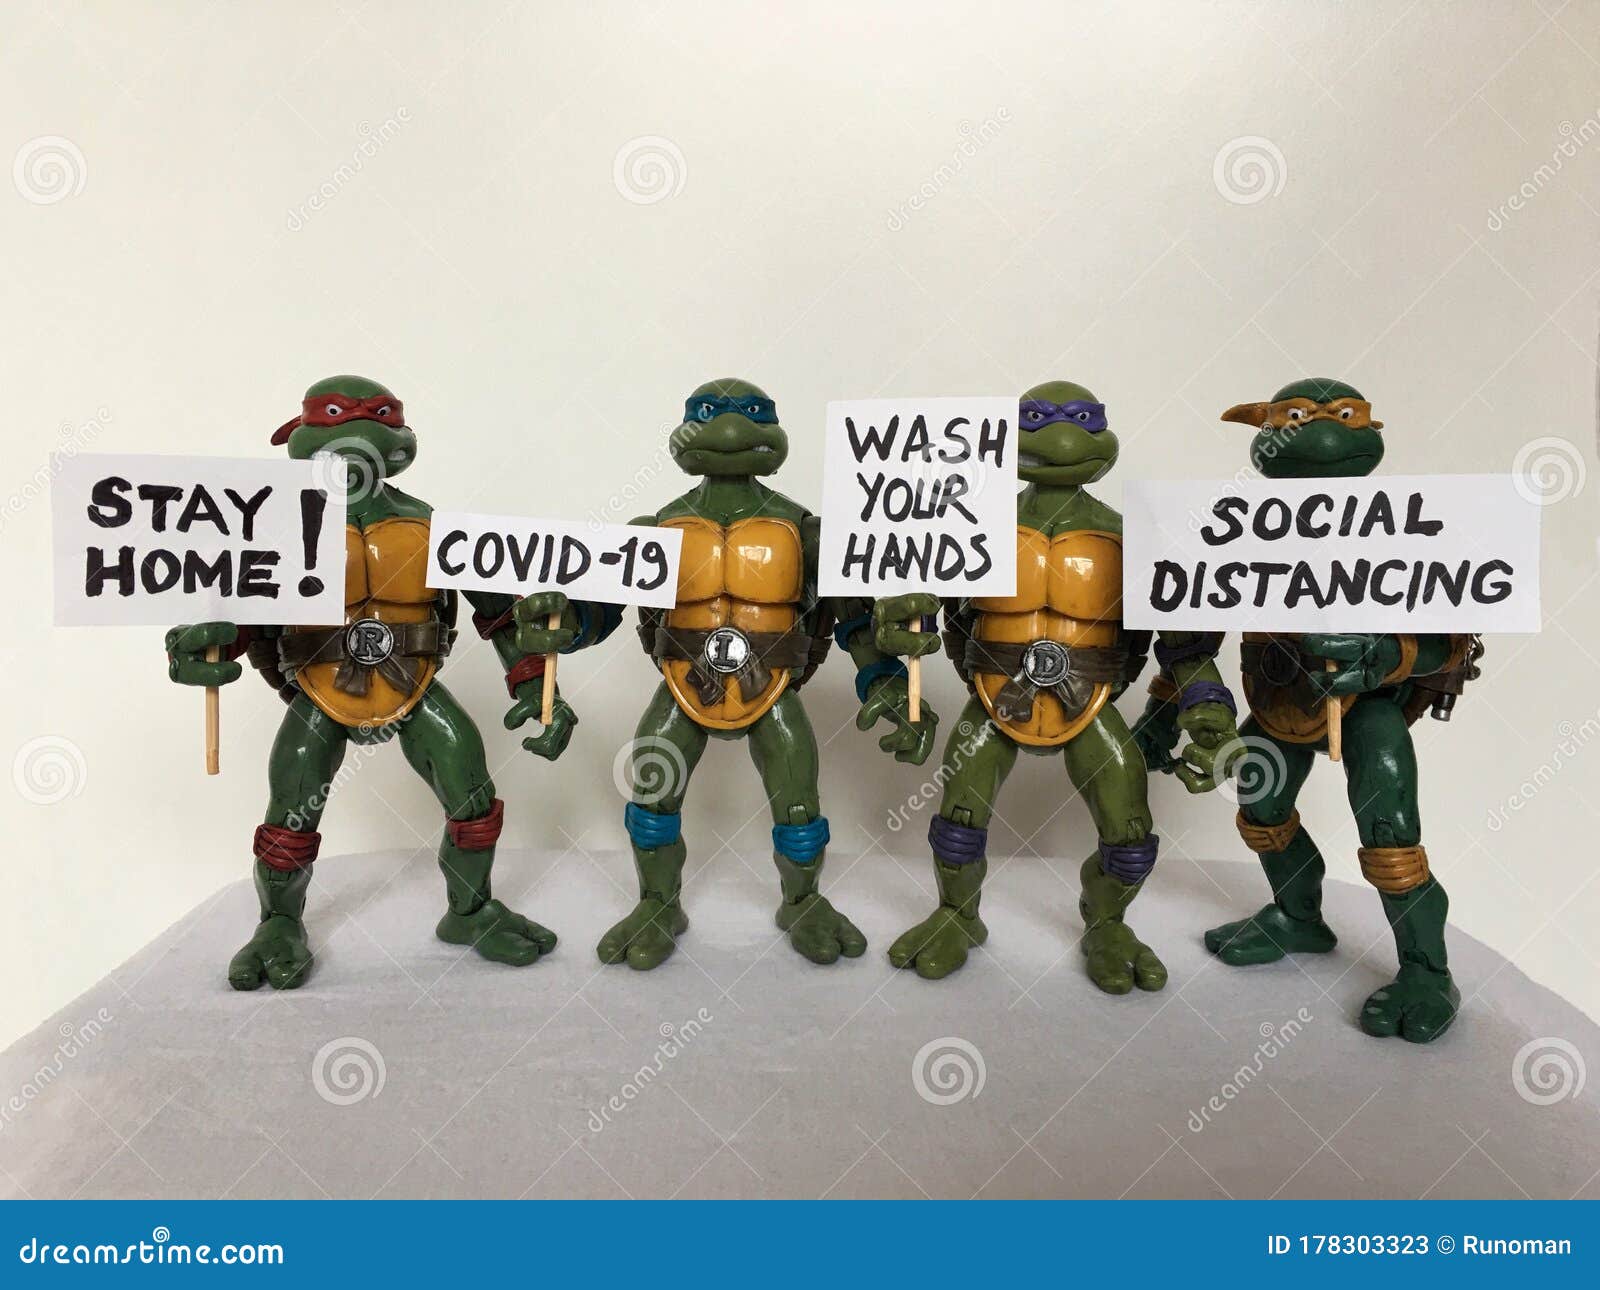 375 Teenage Mutant Ninja Turtles Stock Photos - Free & Royalty-Free Stock  Photos from Dreamstime